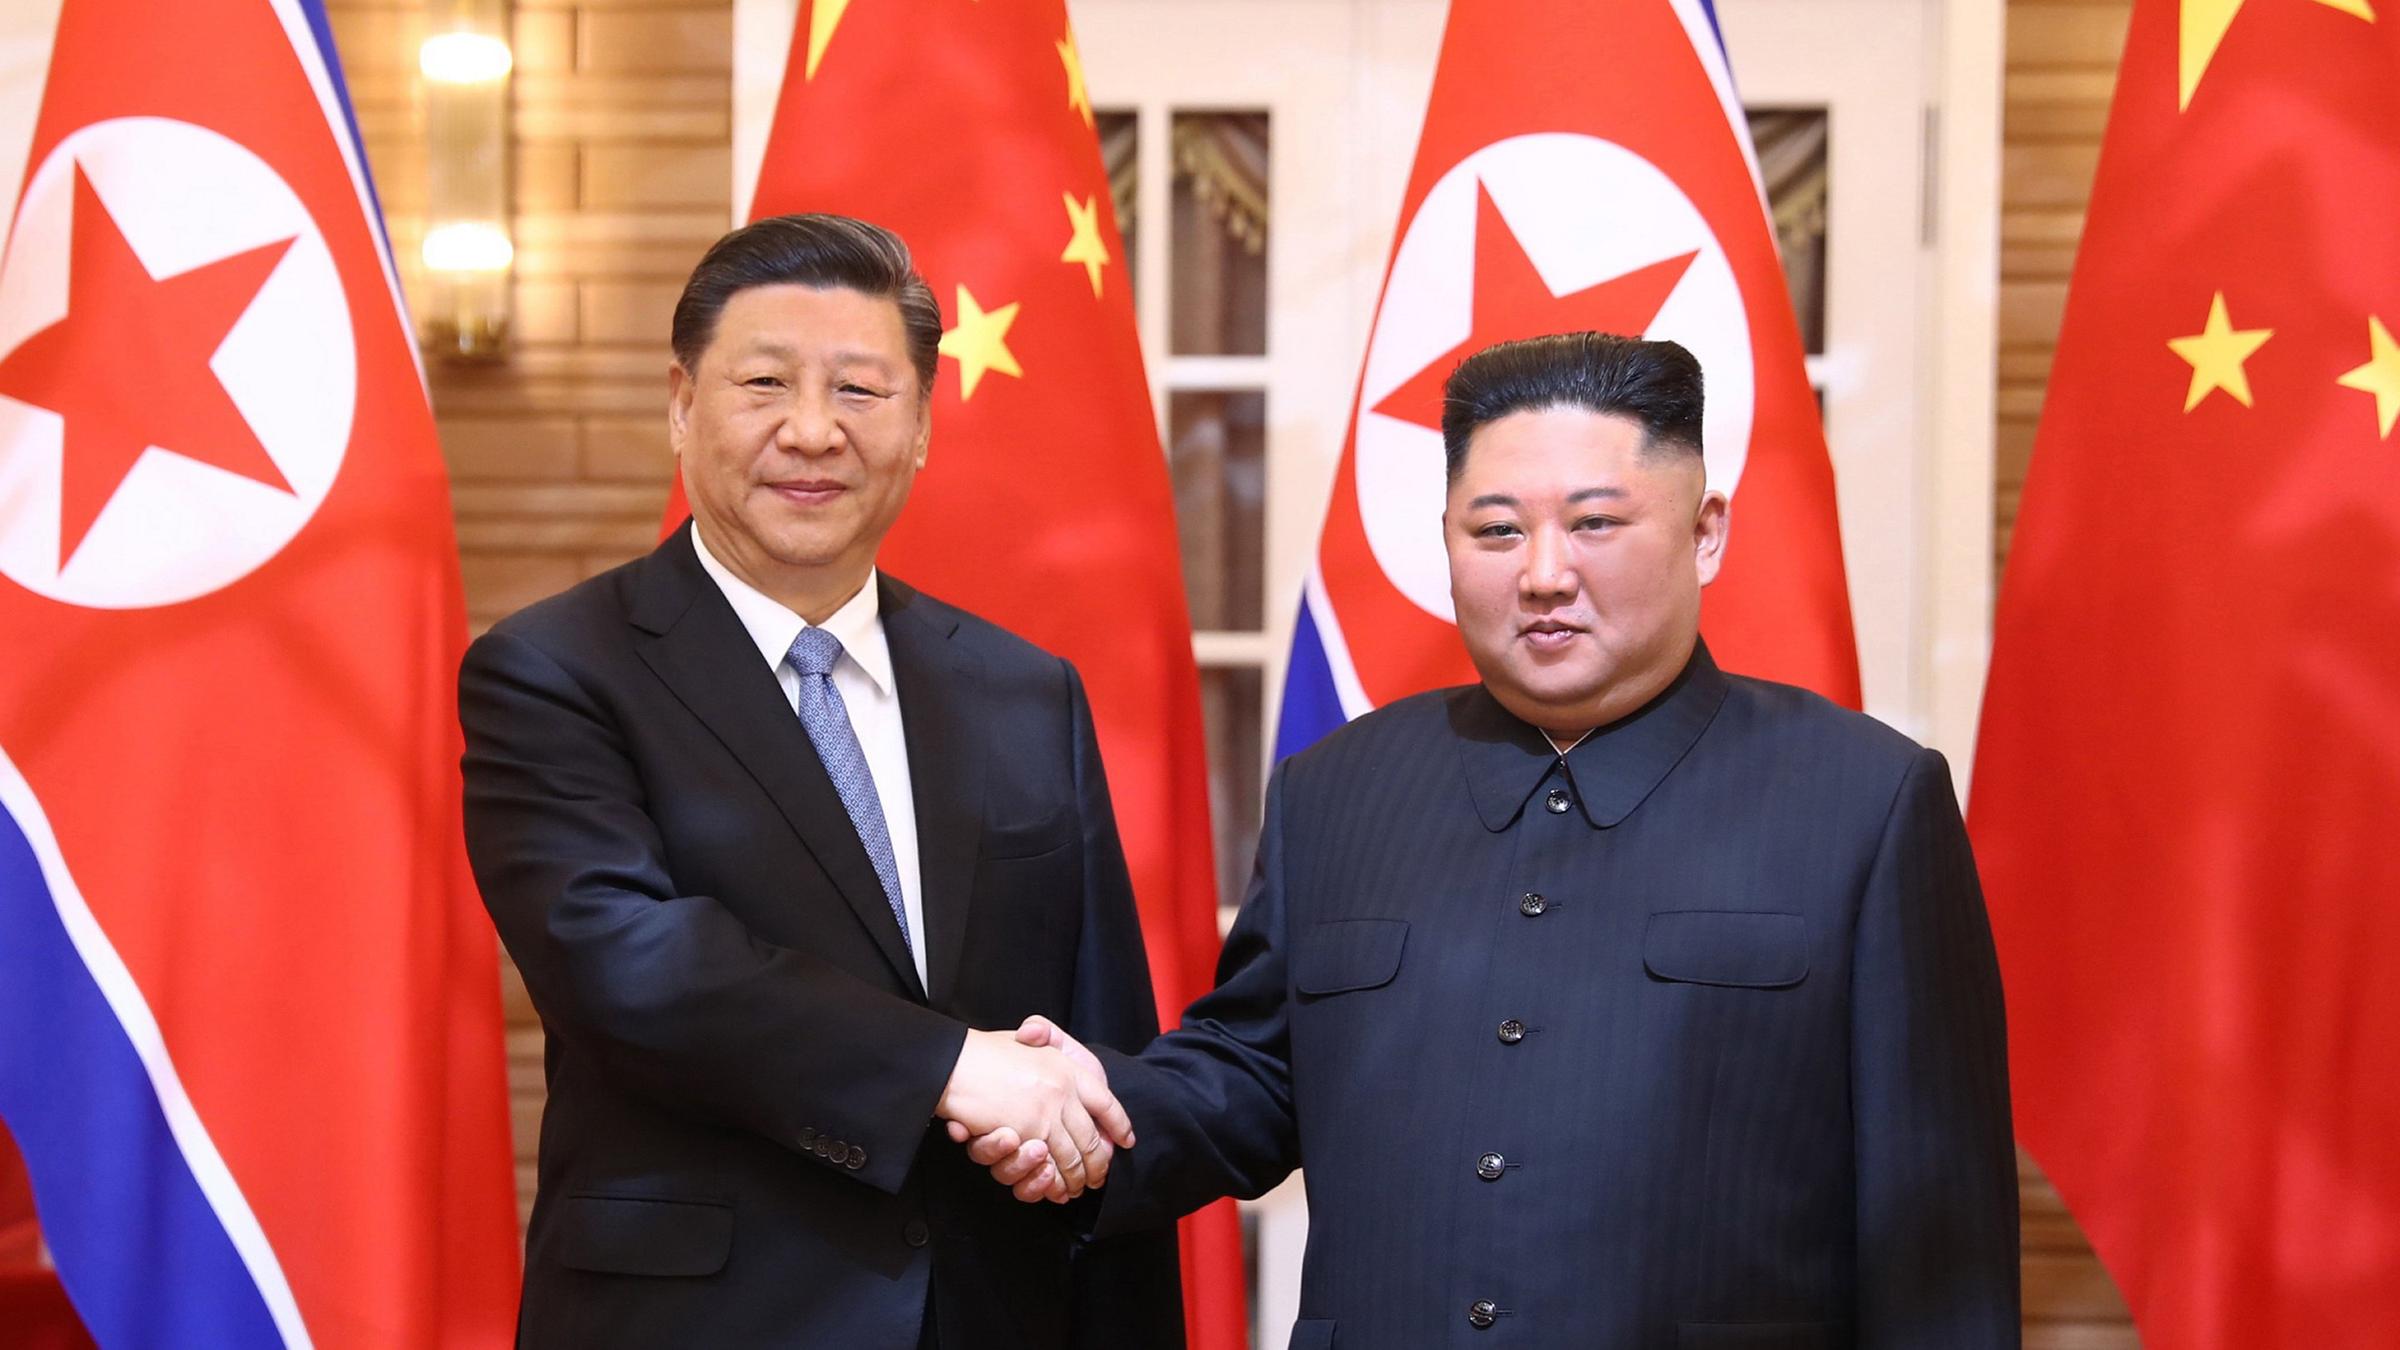 Xi Jinping In Pjongjang Nordkorea Setzt Auf China Zdfheute